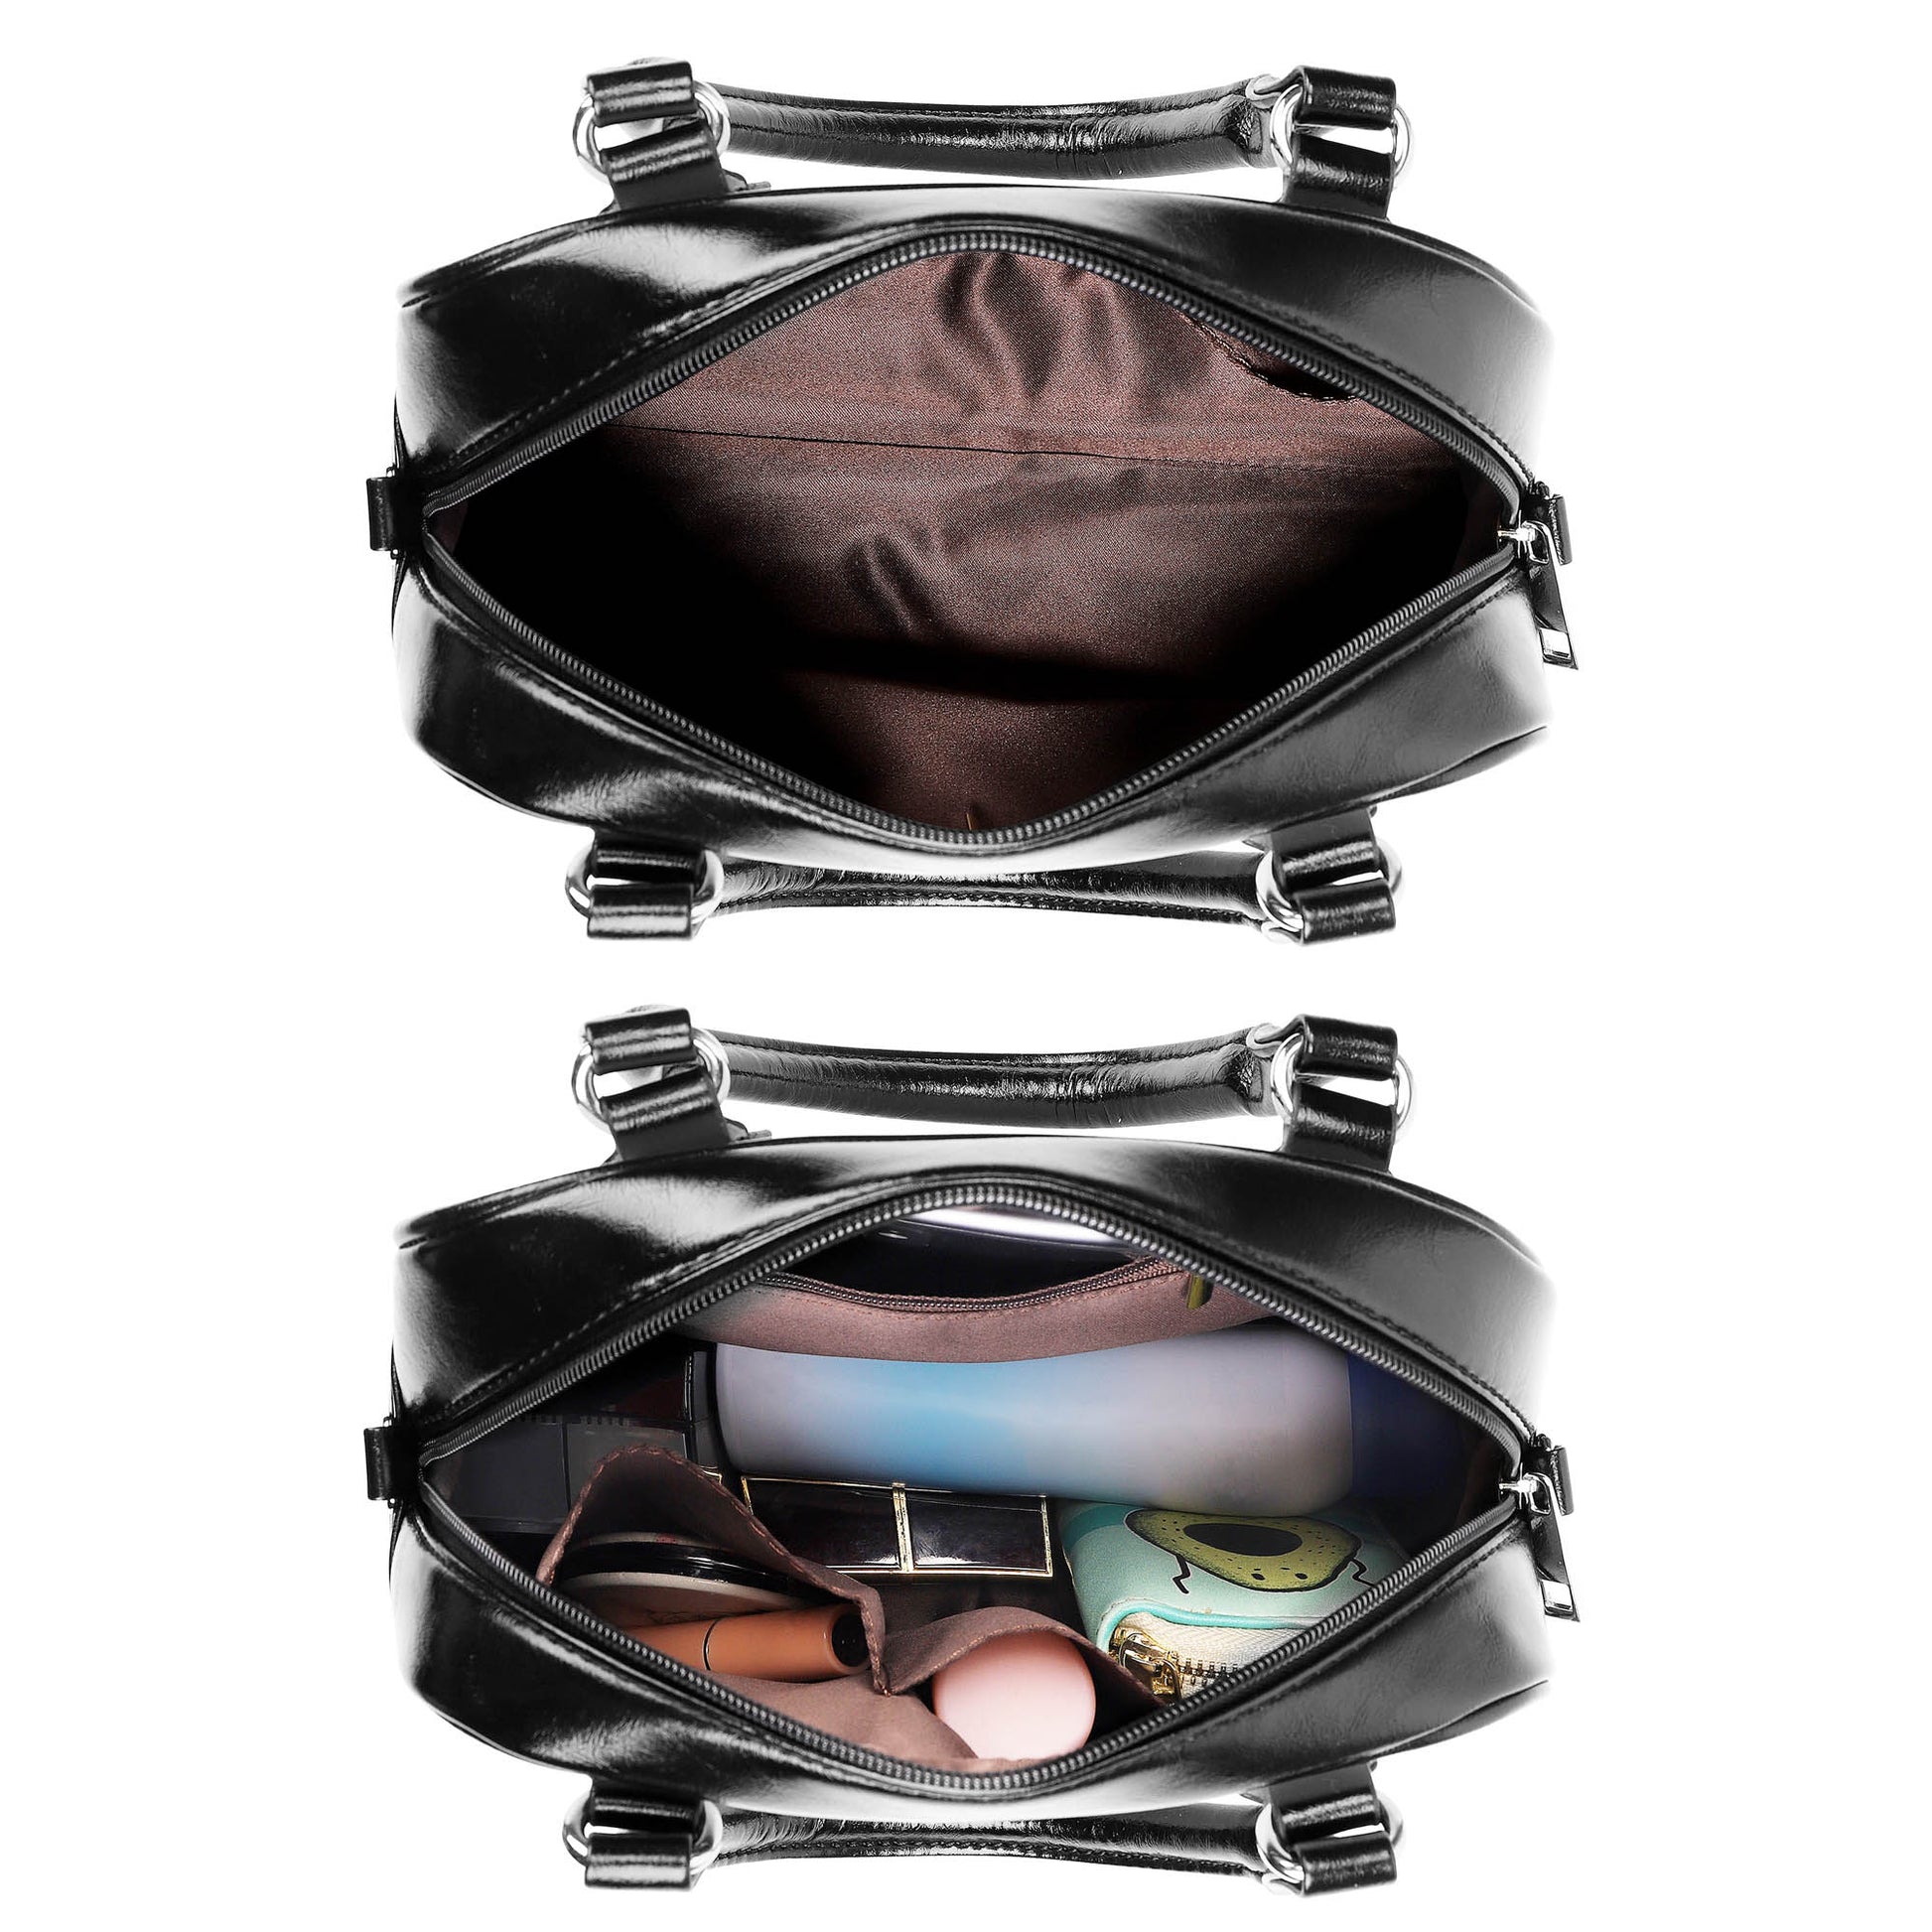 Agnew Modern Tartan Shoulder Handbags - Tartanvibesclothing